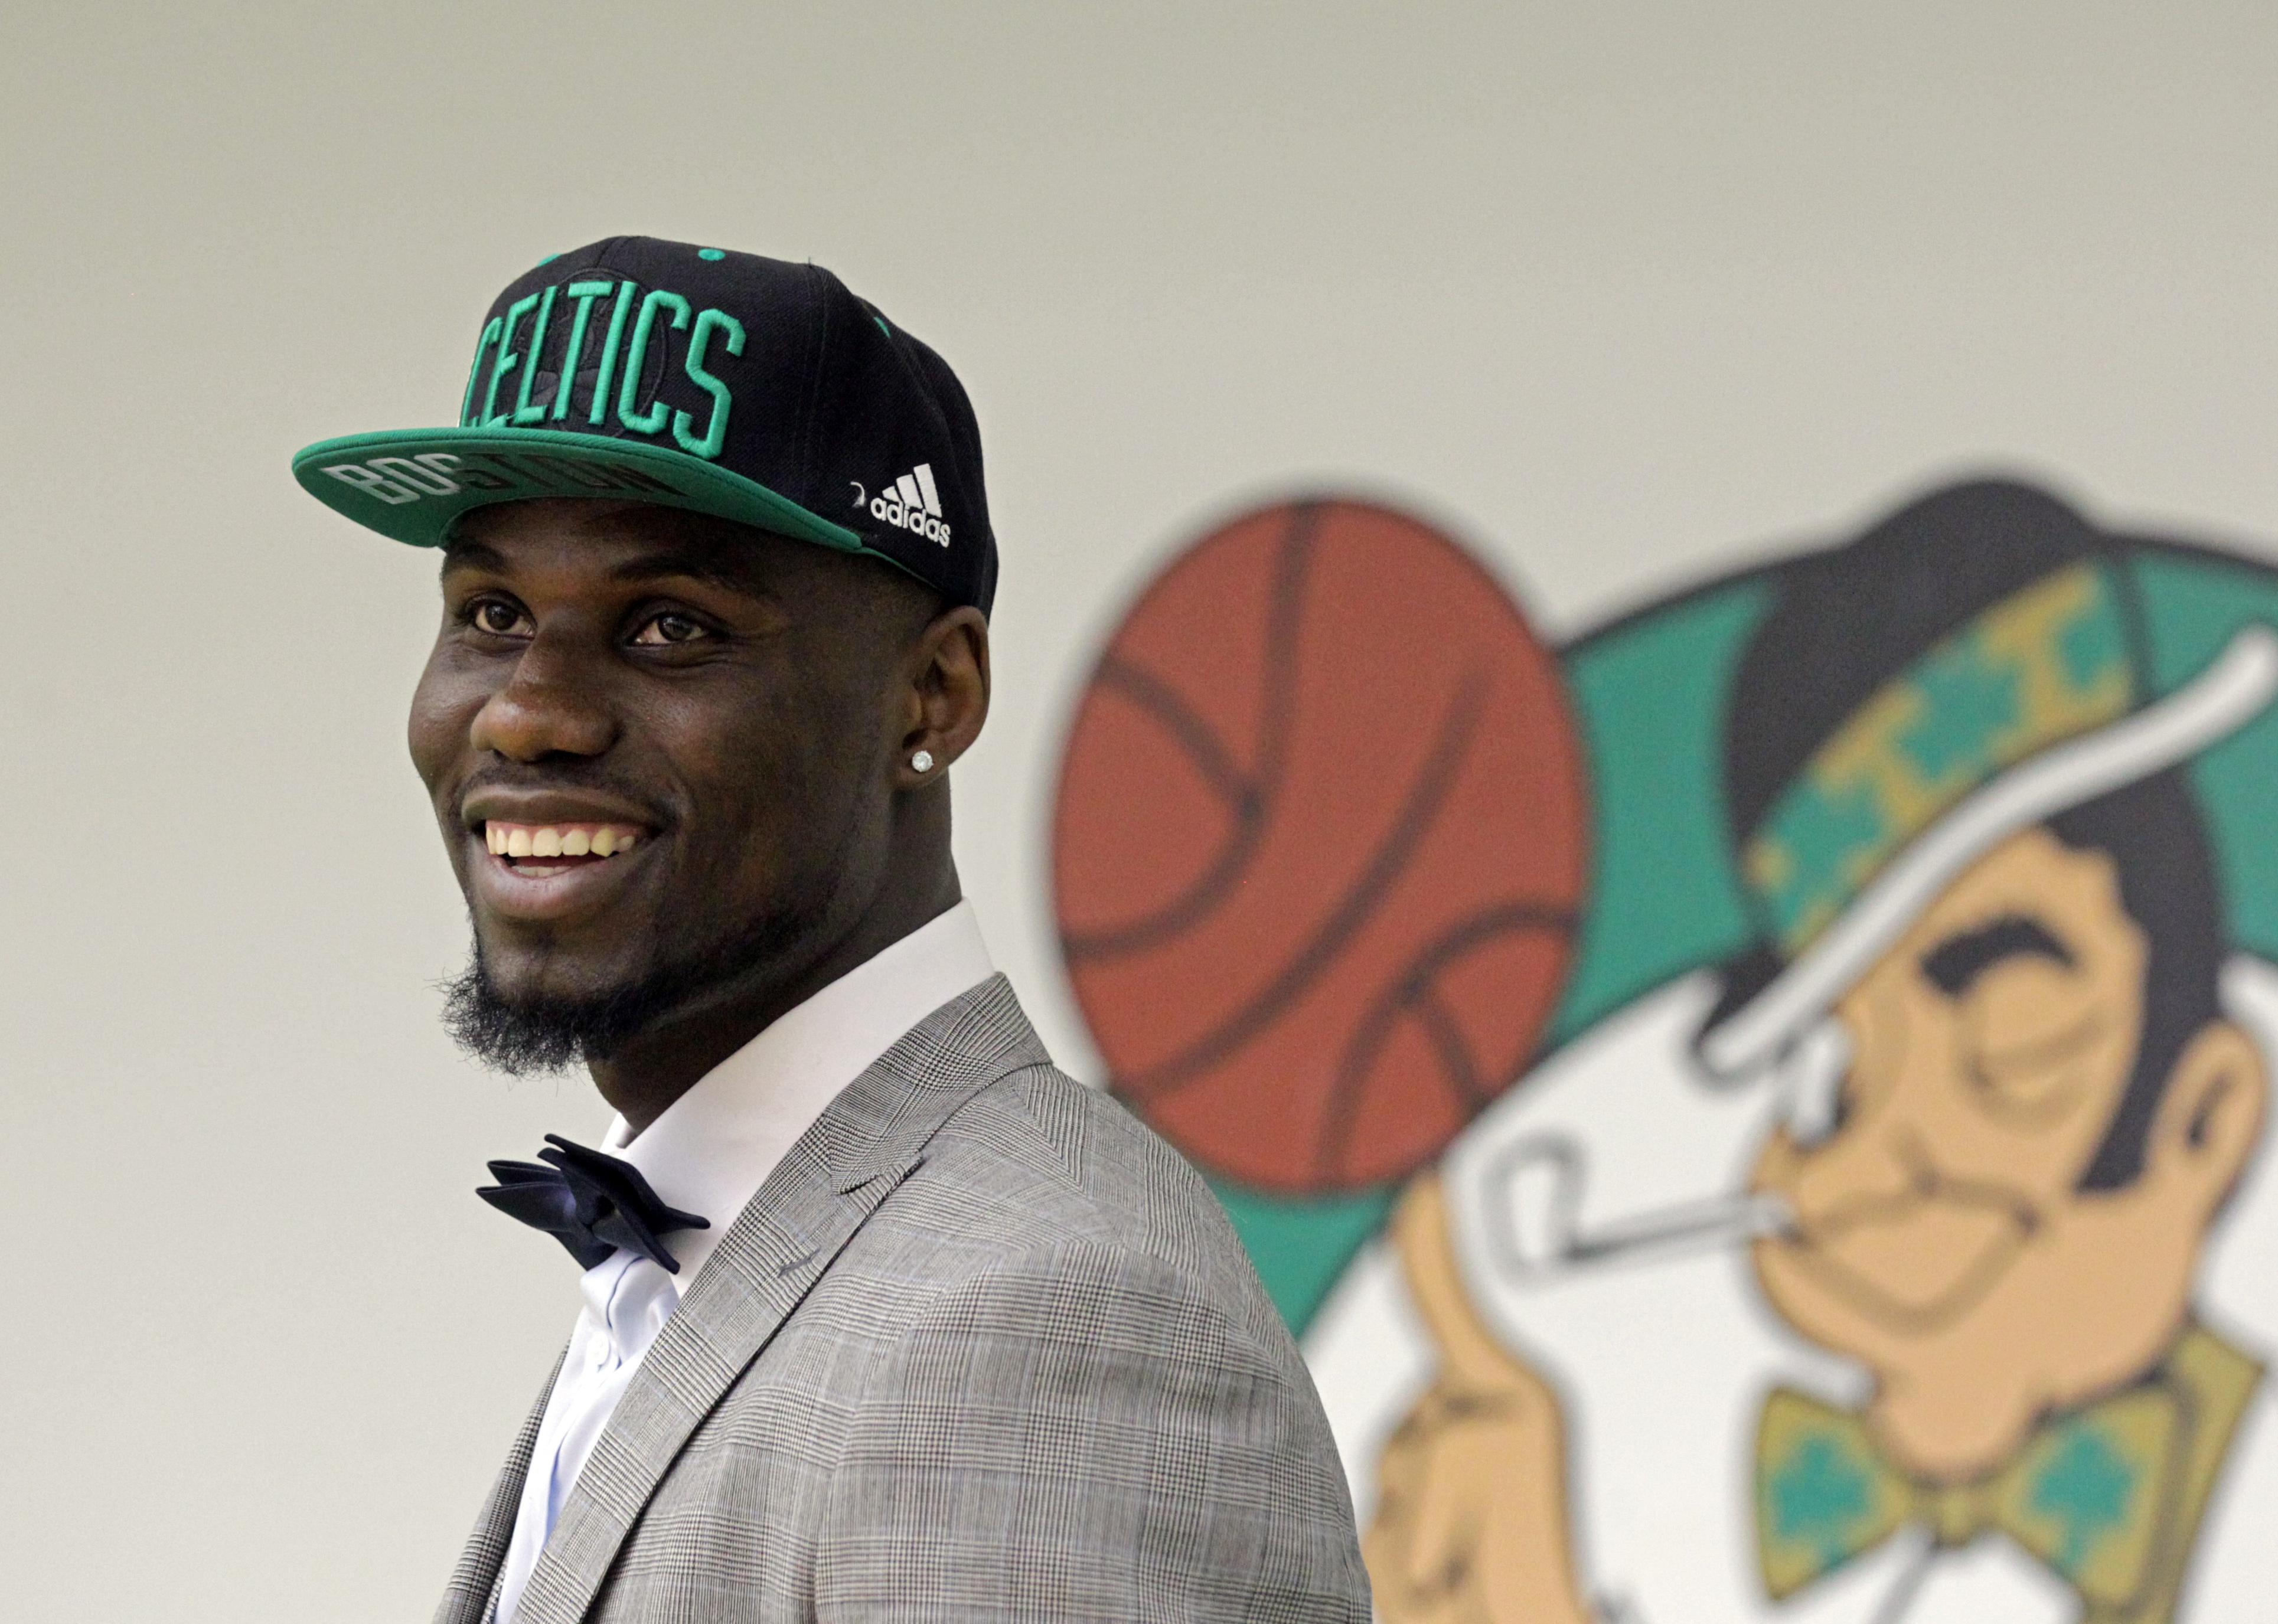 Ben Bentil smiling, wearing a Celtics cap.